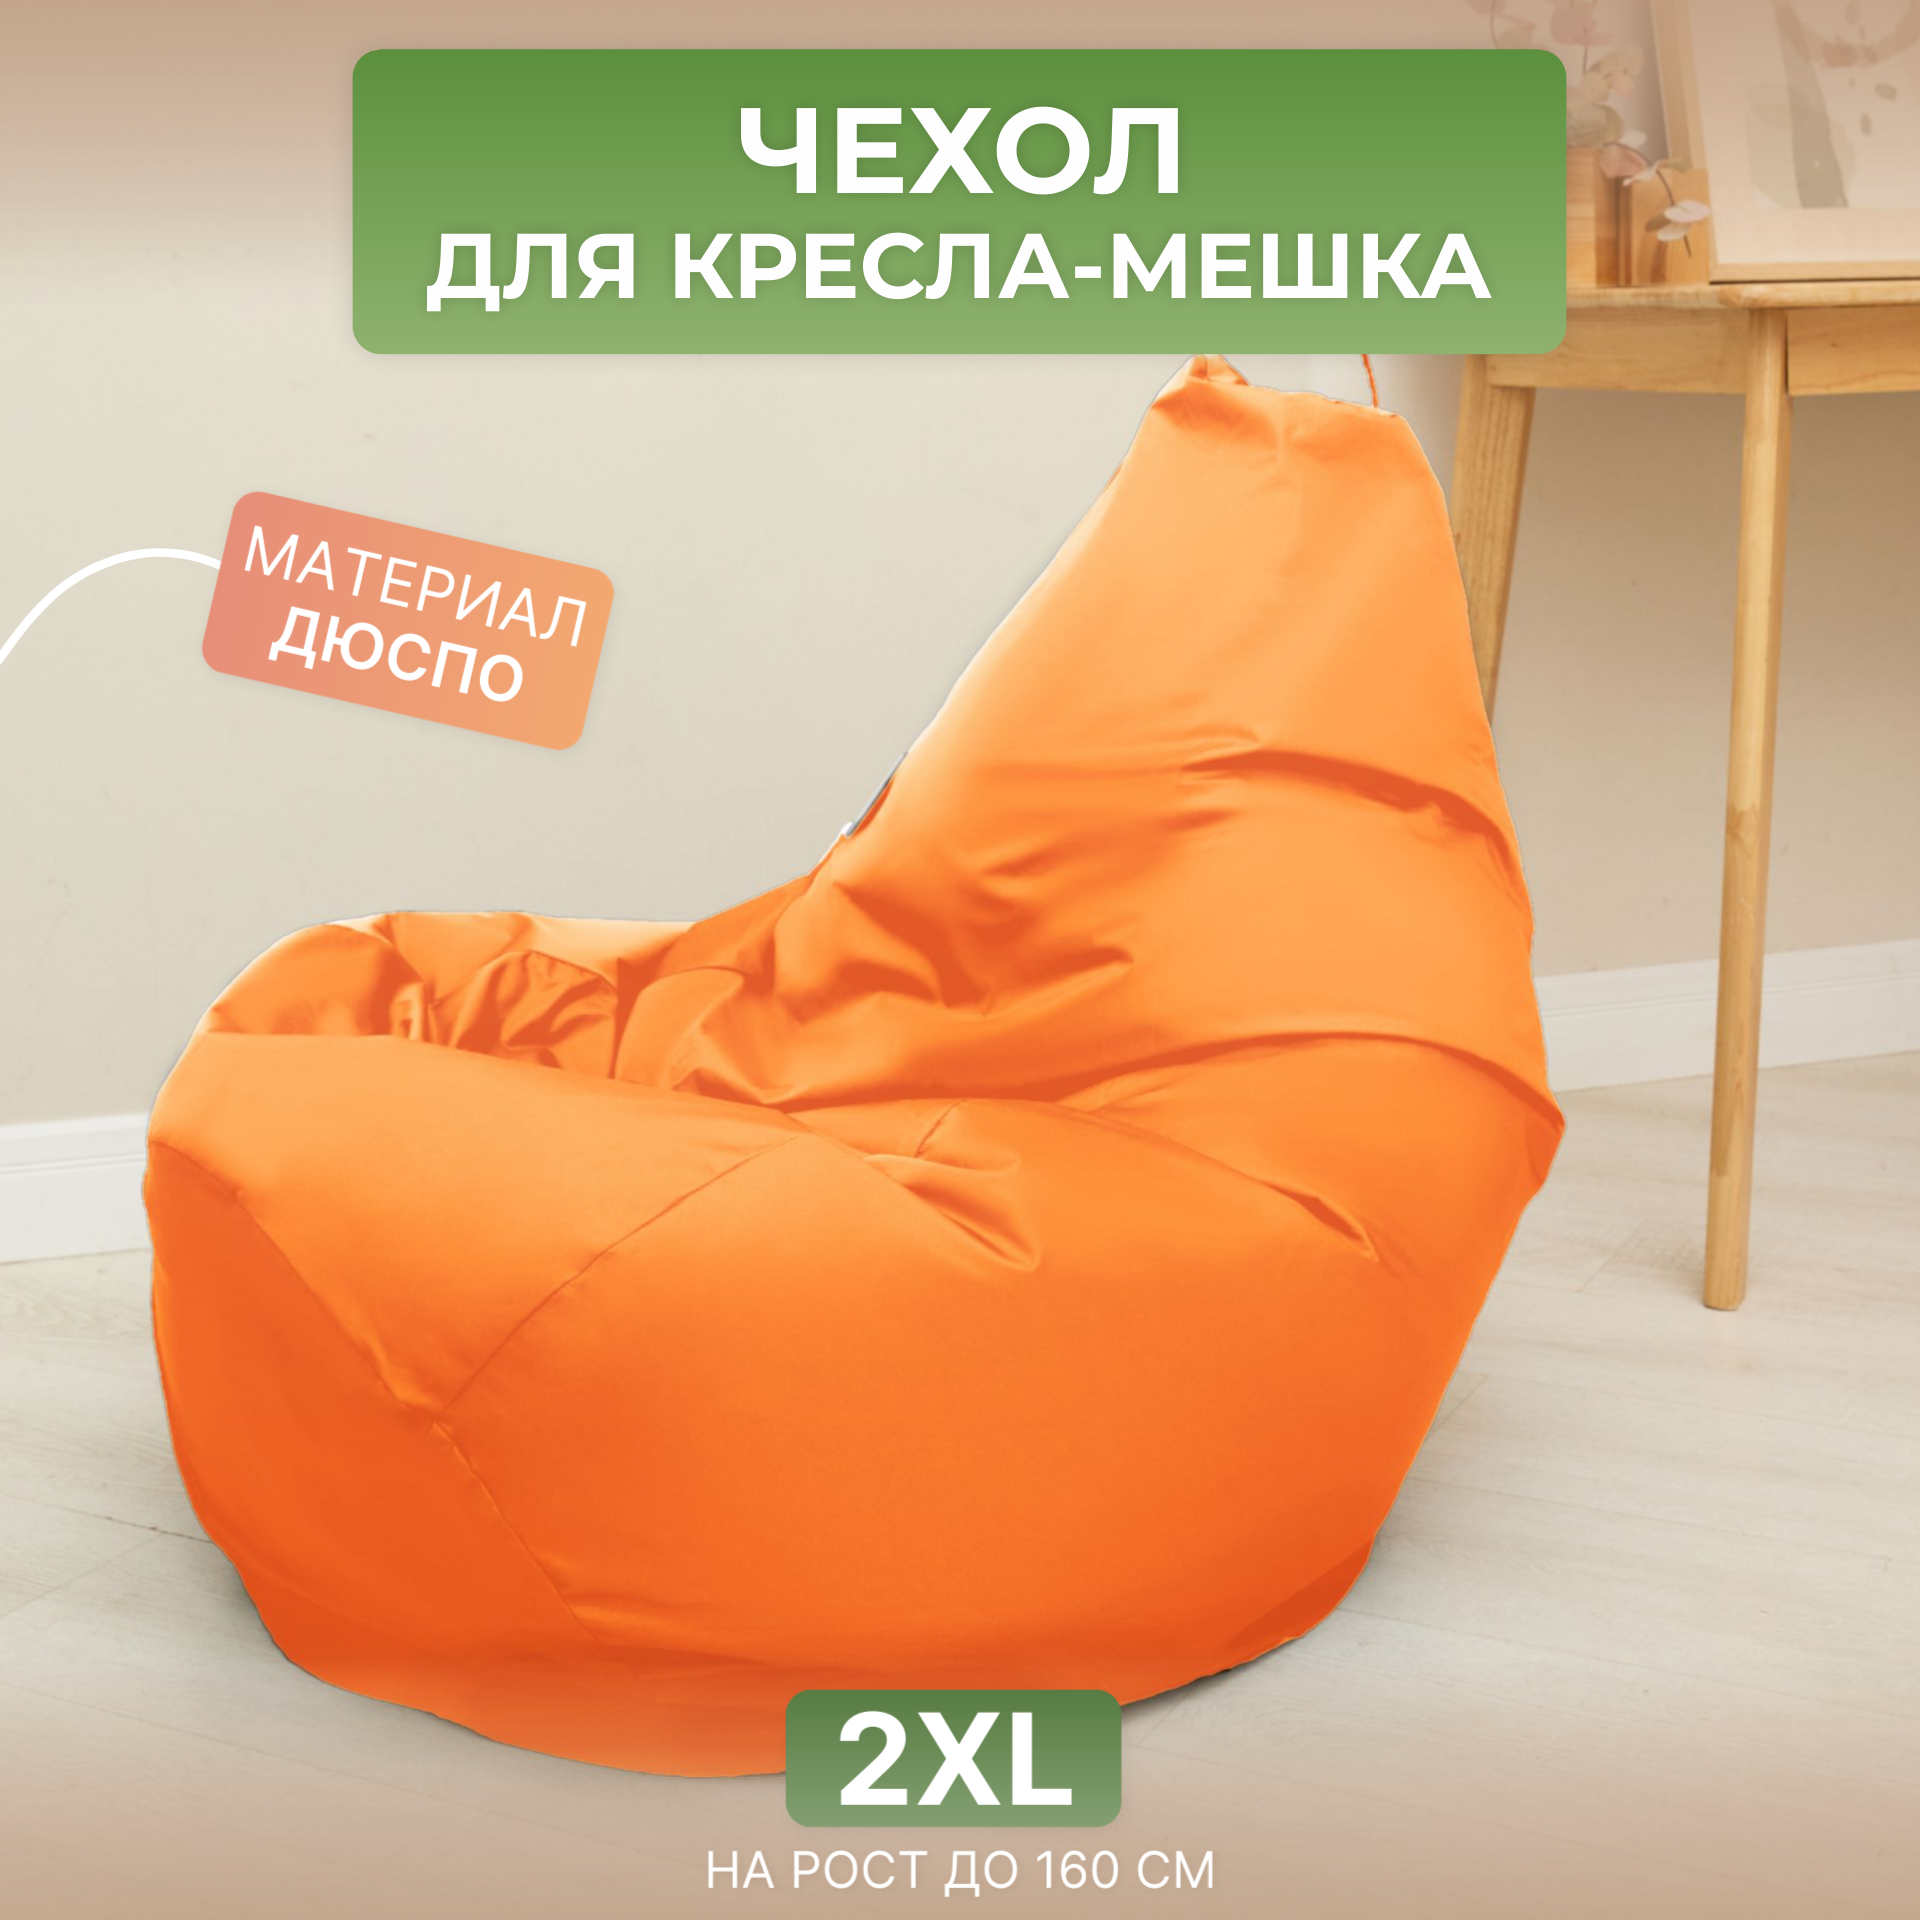 Чехол для кресла-мешка Груша 2XL оранжевый Дюспо